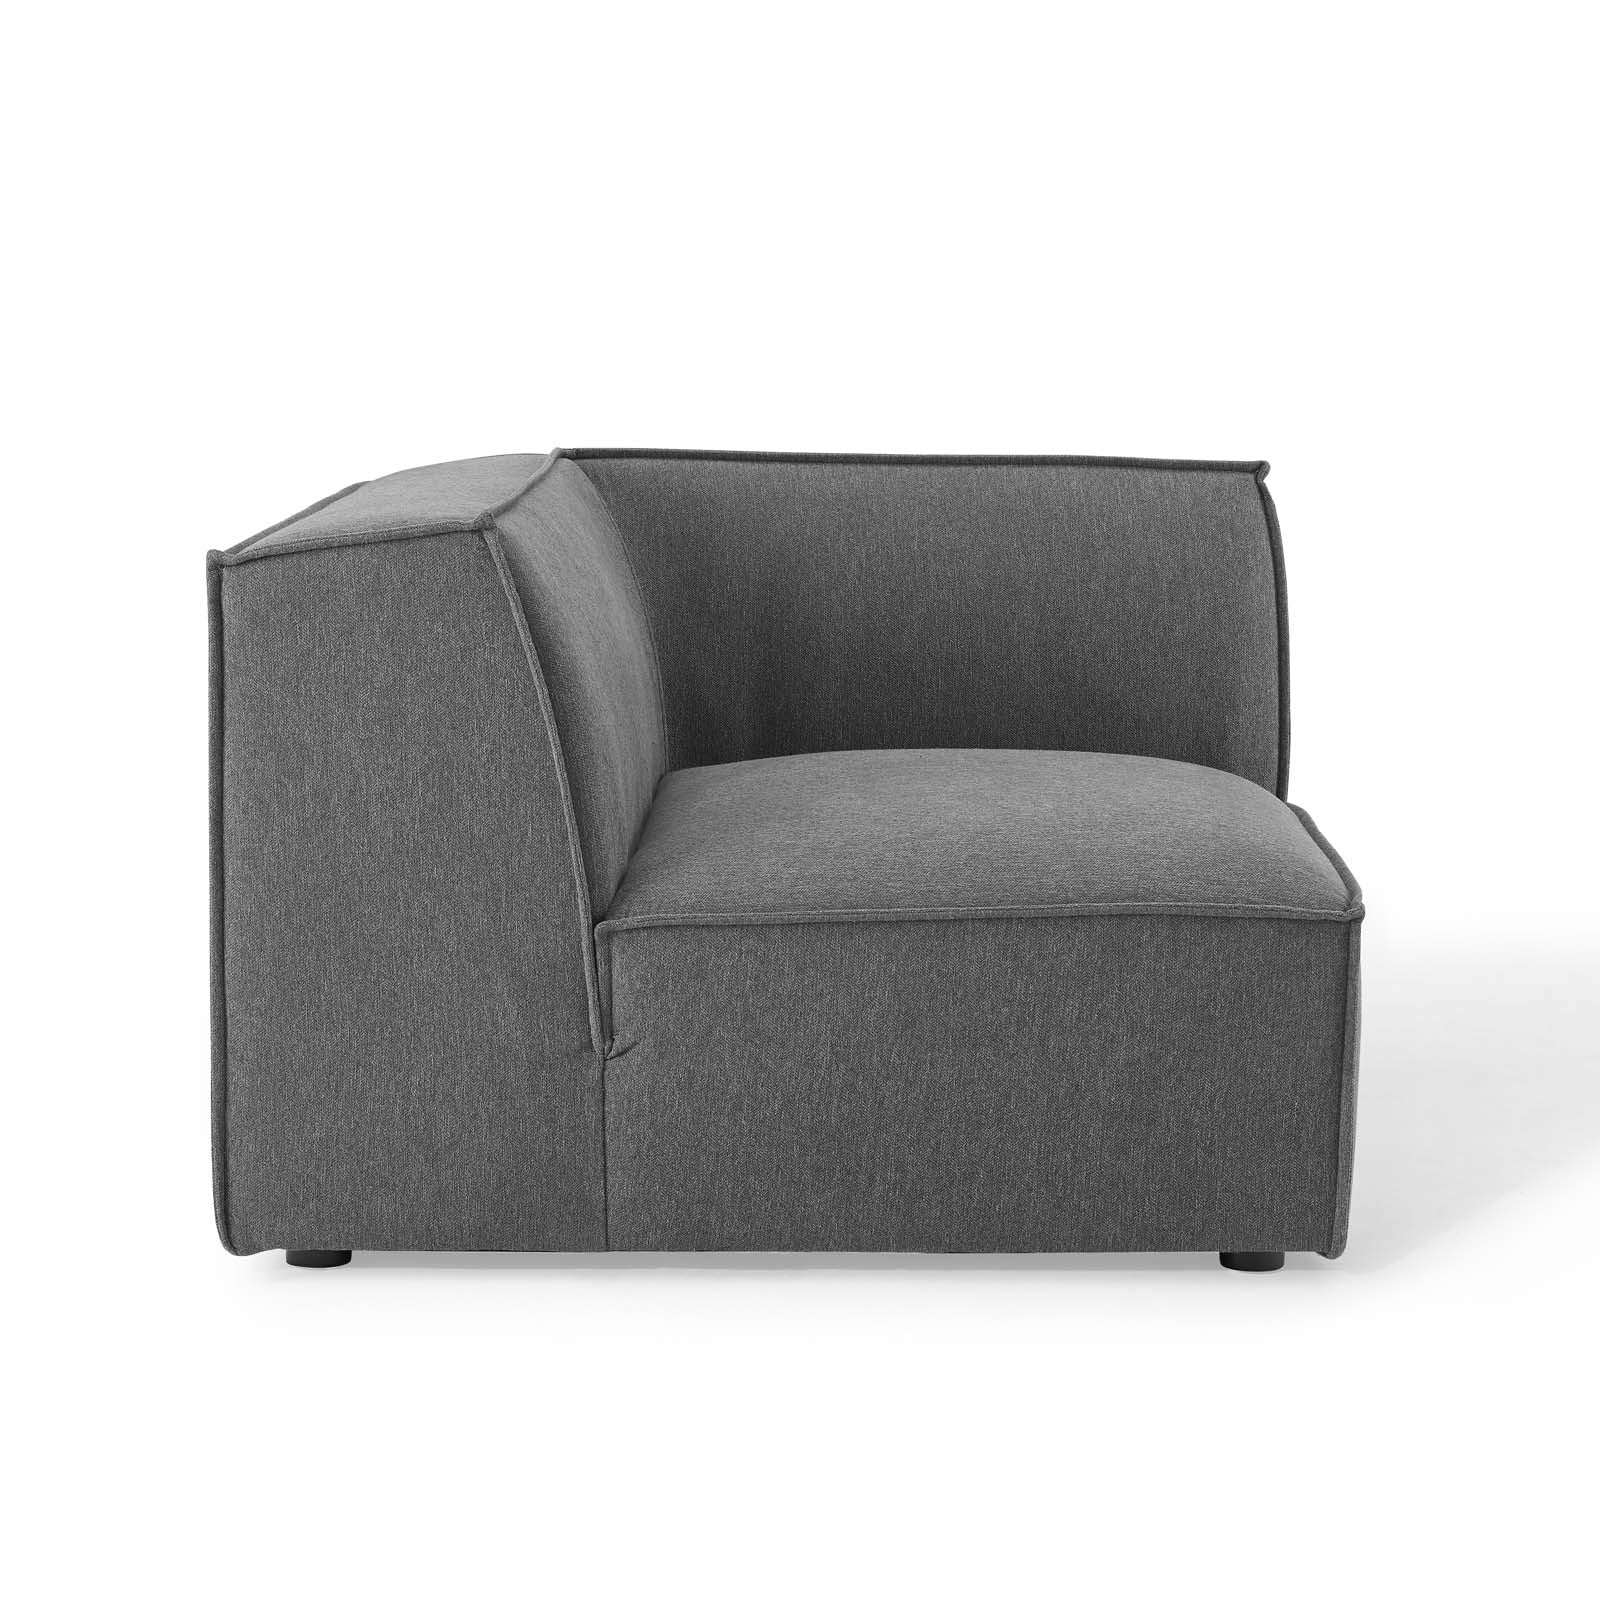 Restore Sectional Sofa Corner Chair - East Shore Modern Home Furnishings